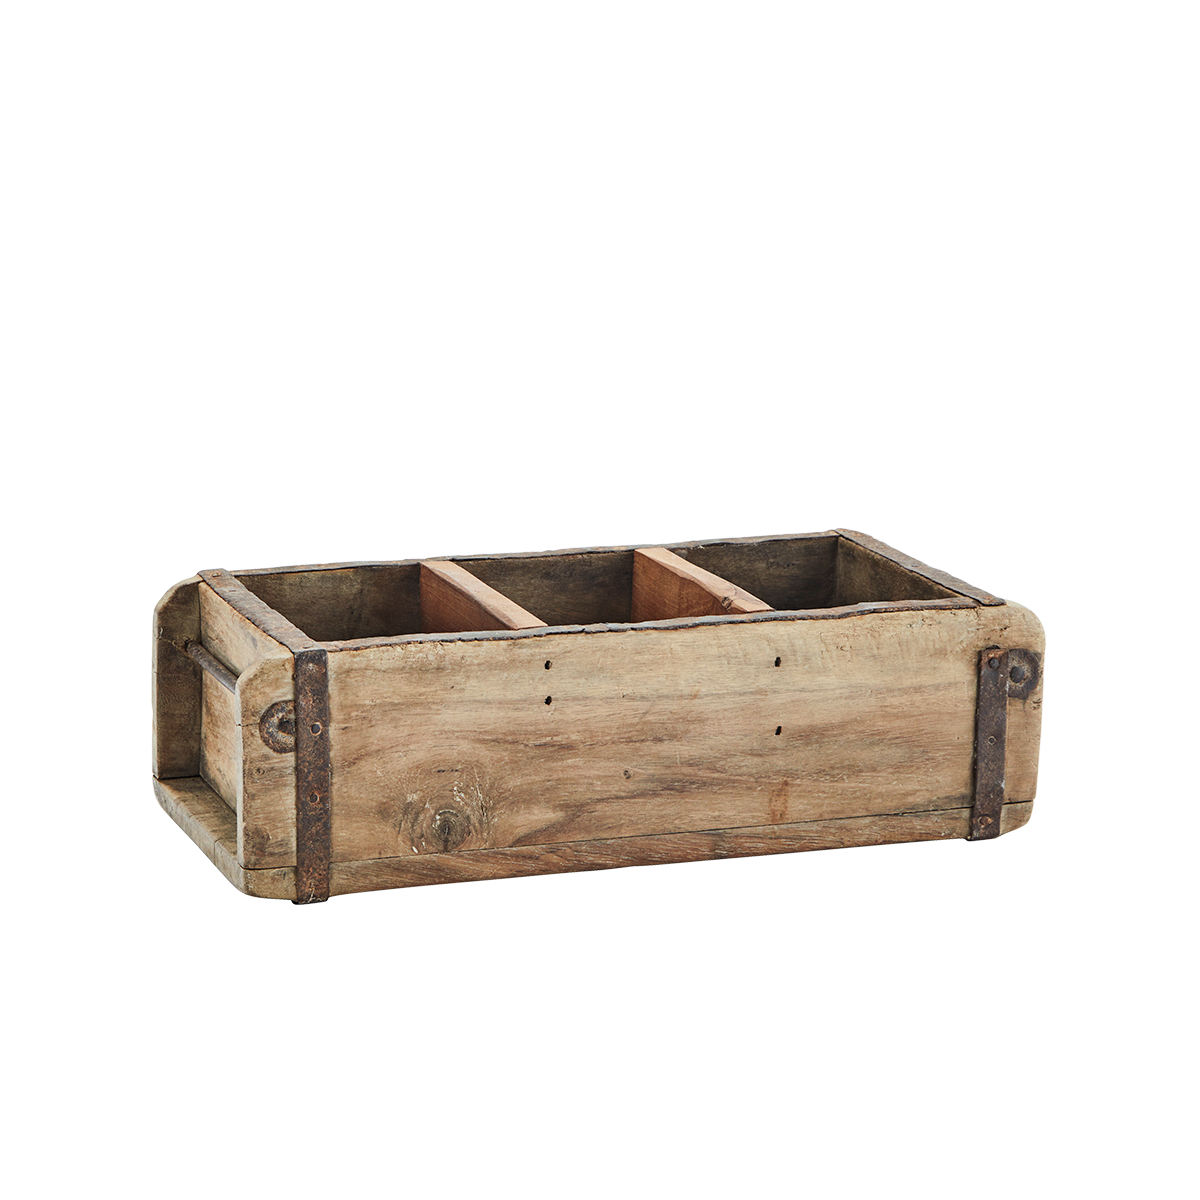 Upcycled wooden brick mould shelf